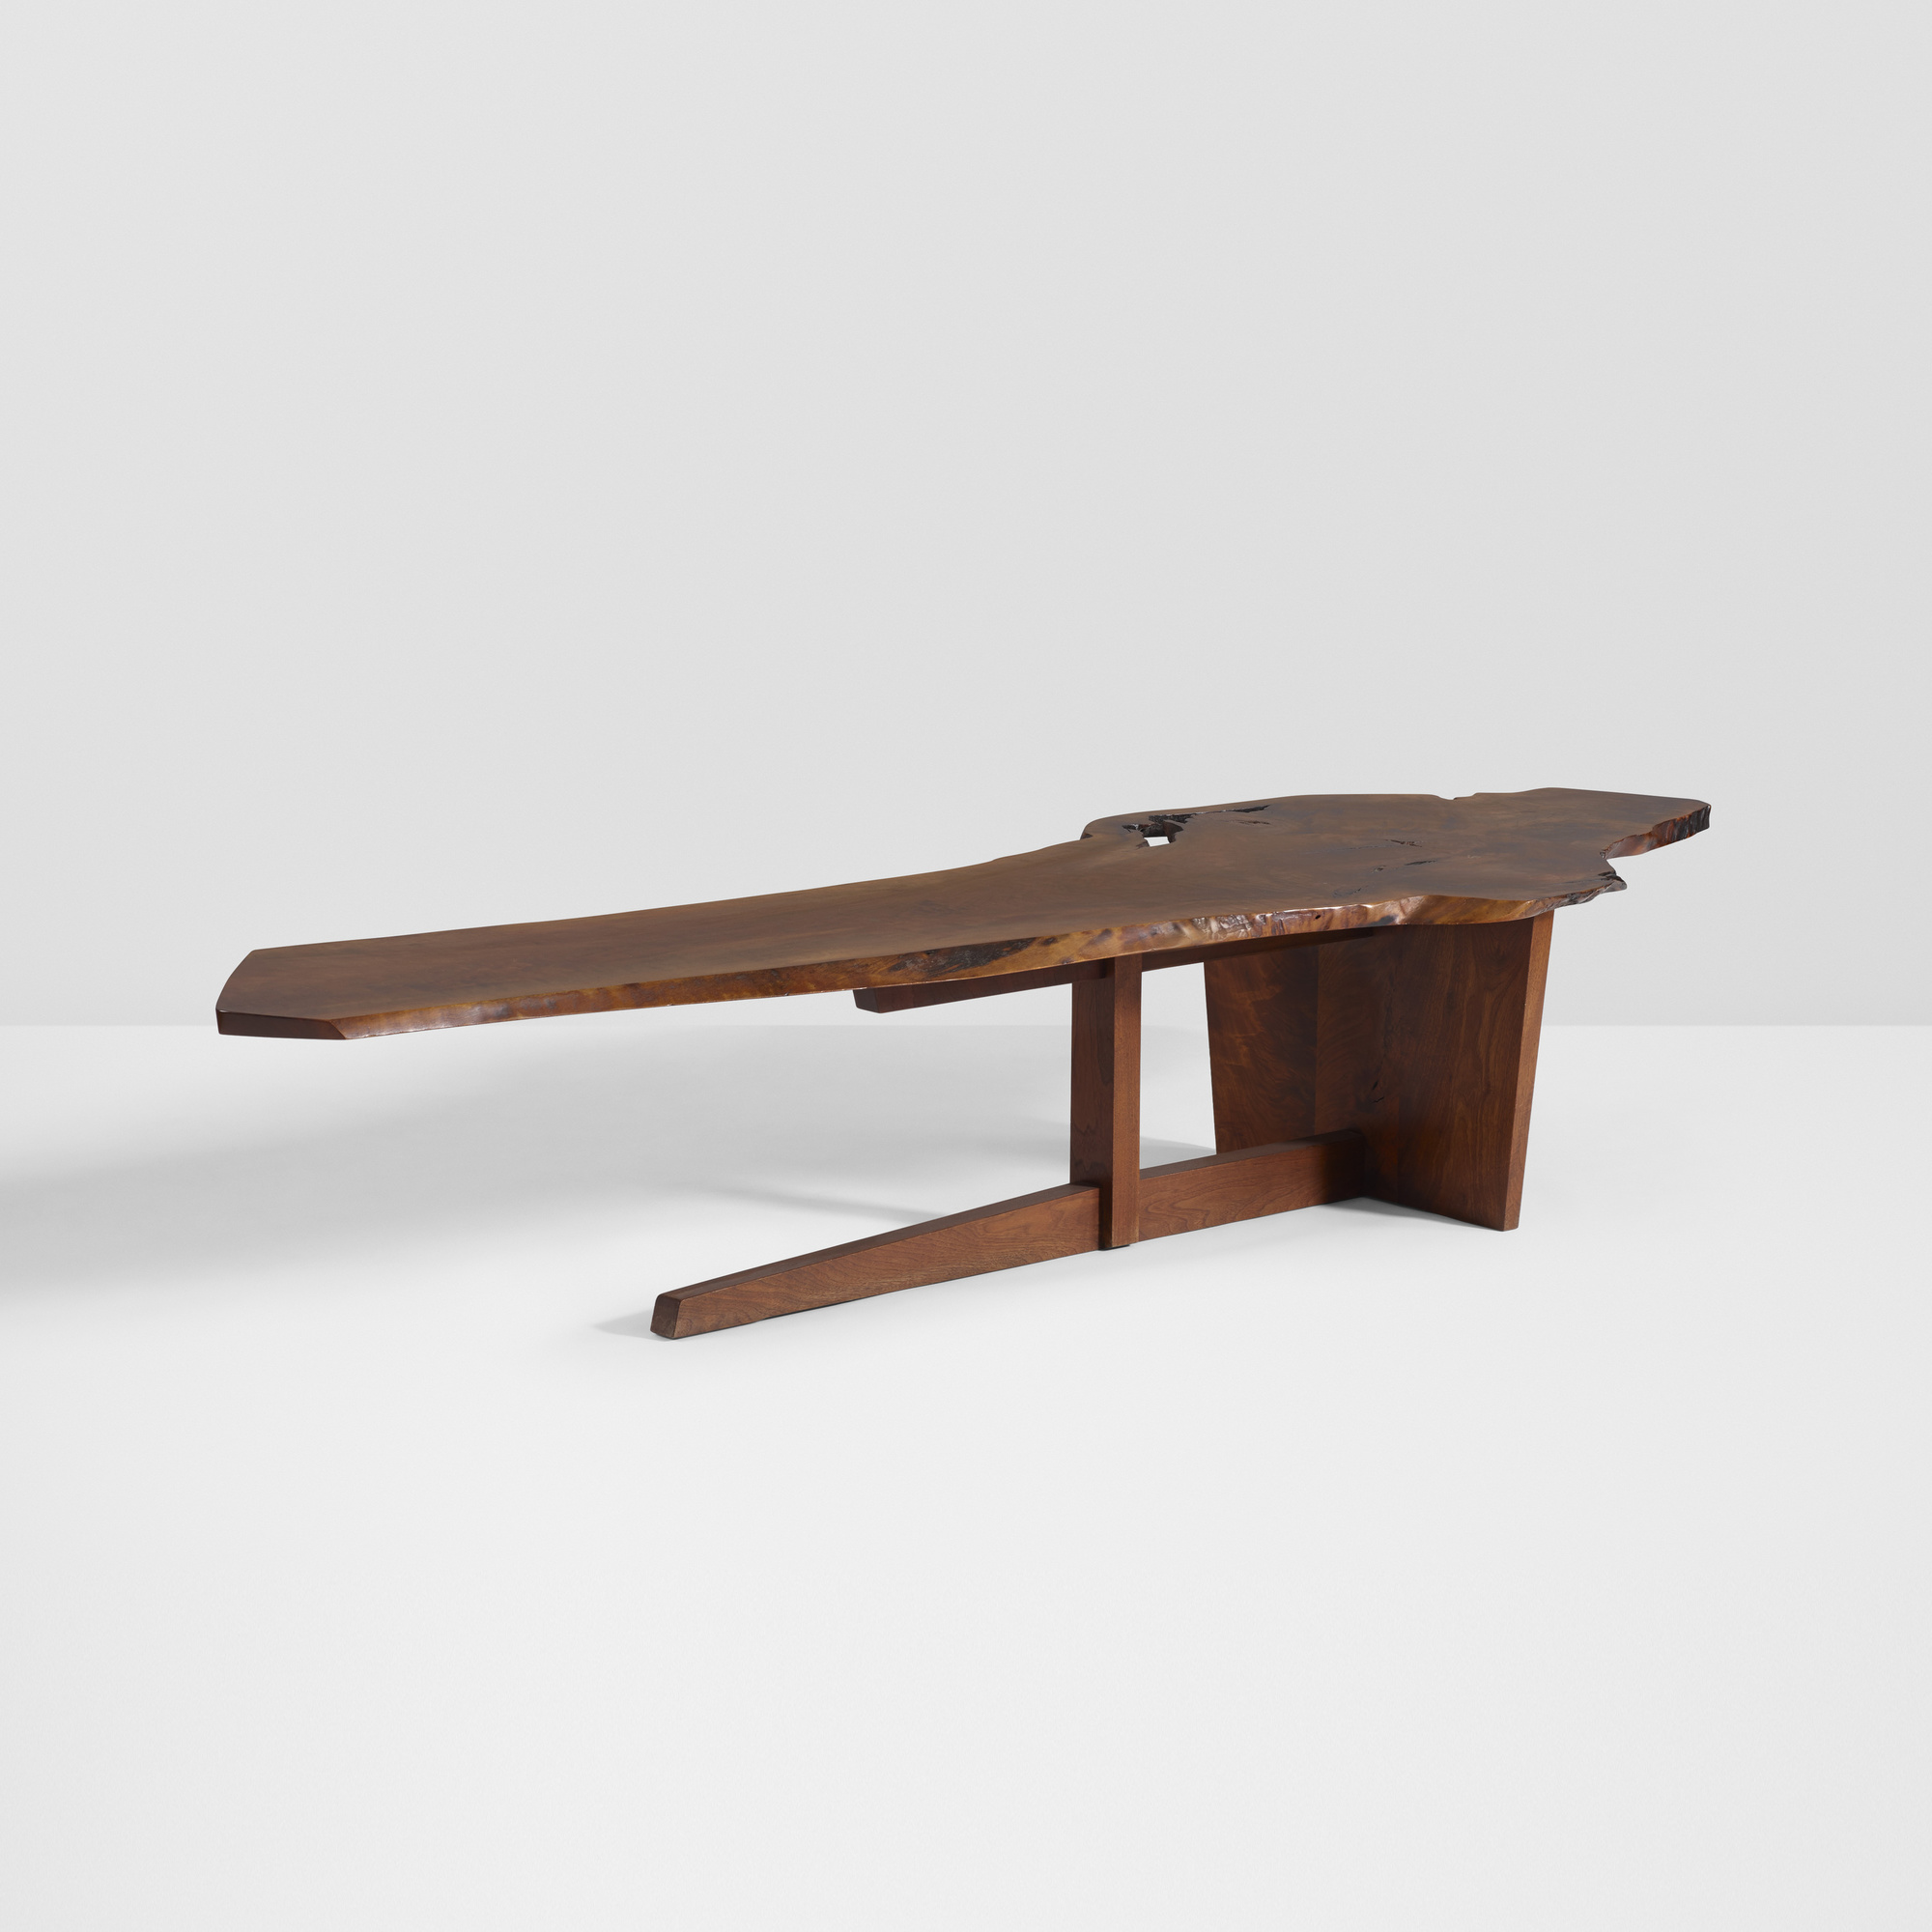 26: GEORGE NAKASHIMA, Important Minguren II coffee table < Design ...